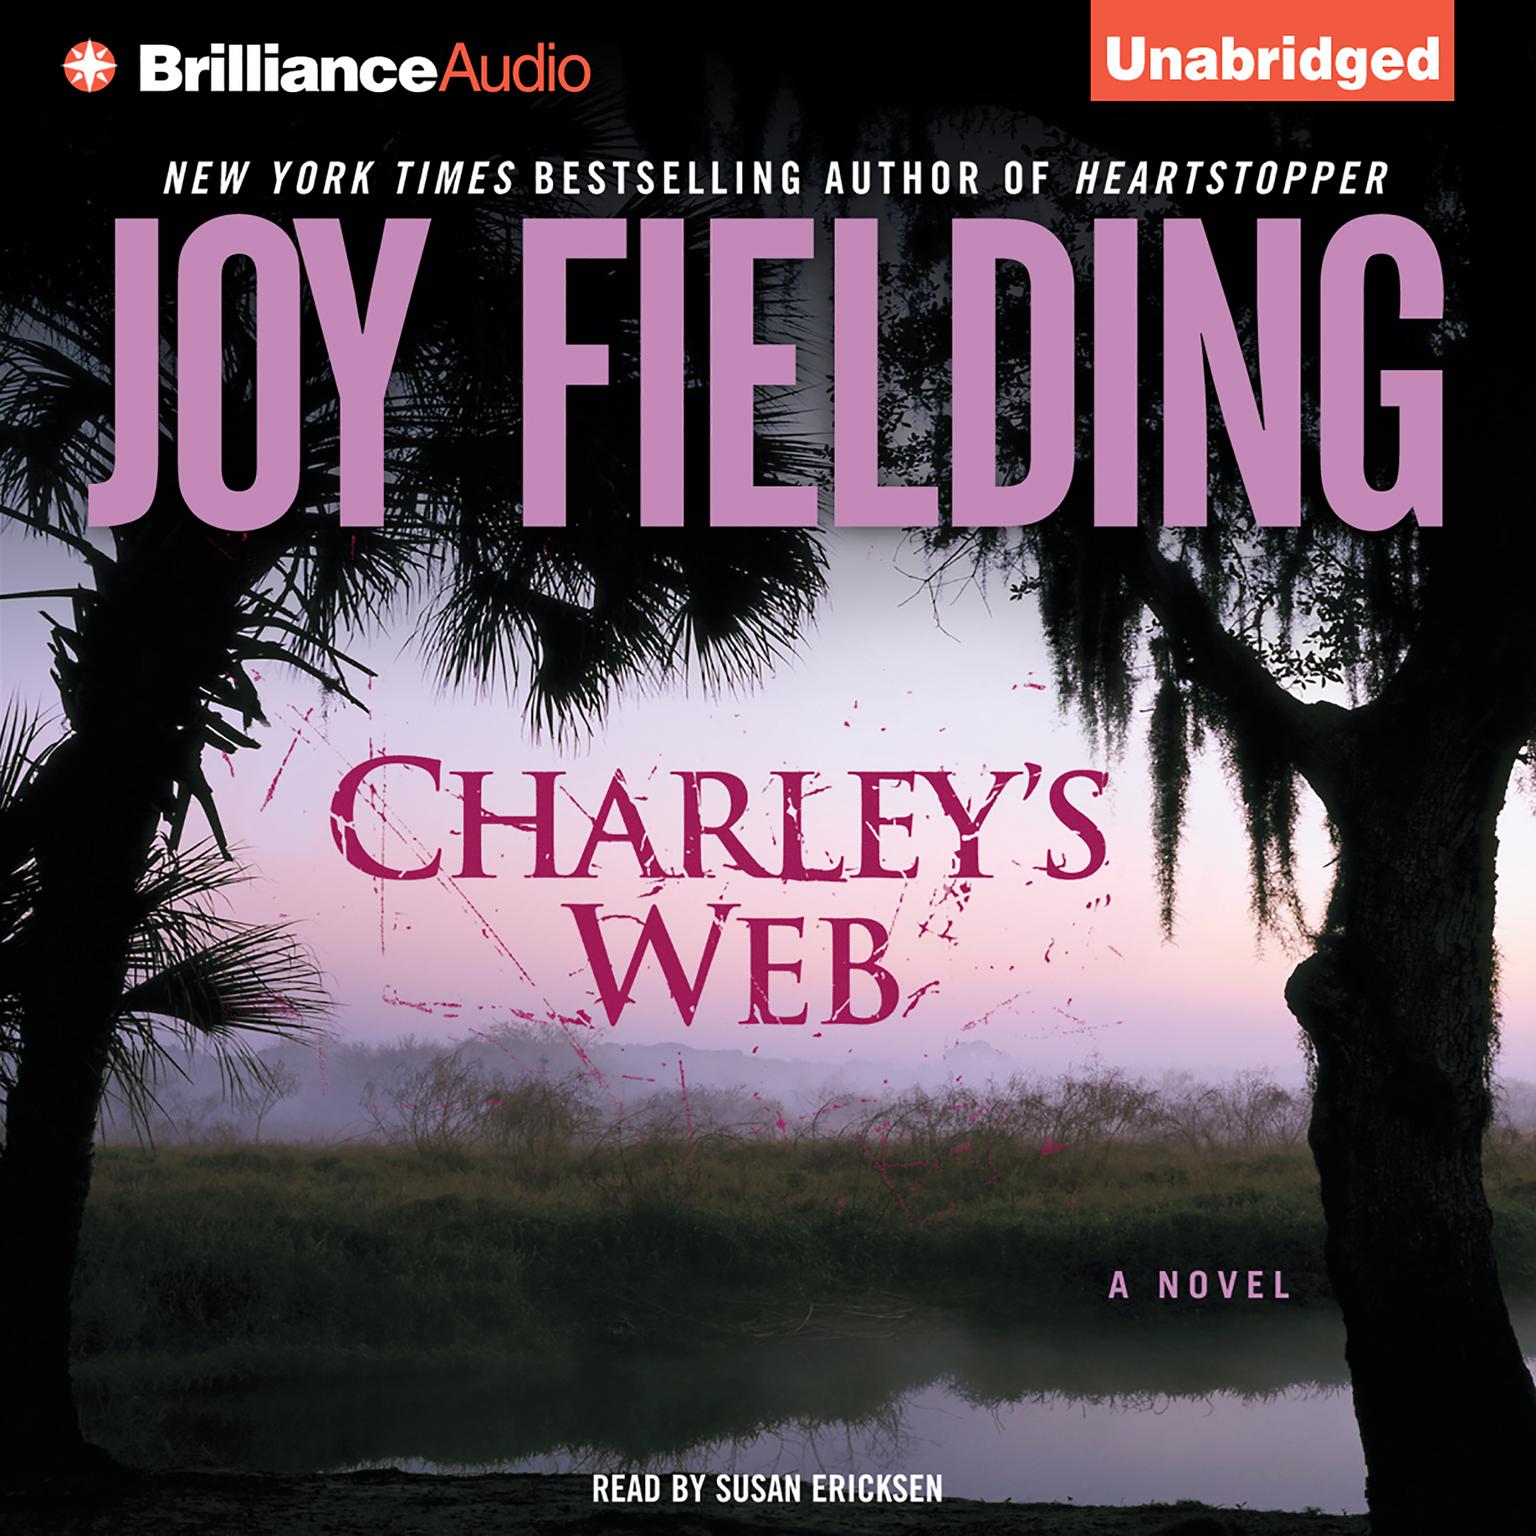 Charleys Web Audiobook, by Joy Fielding